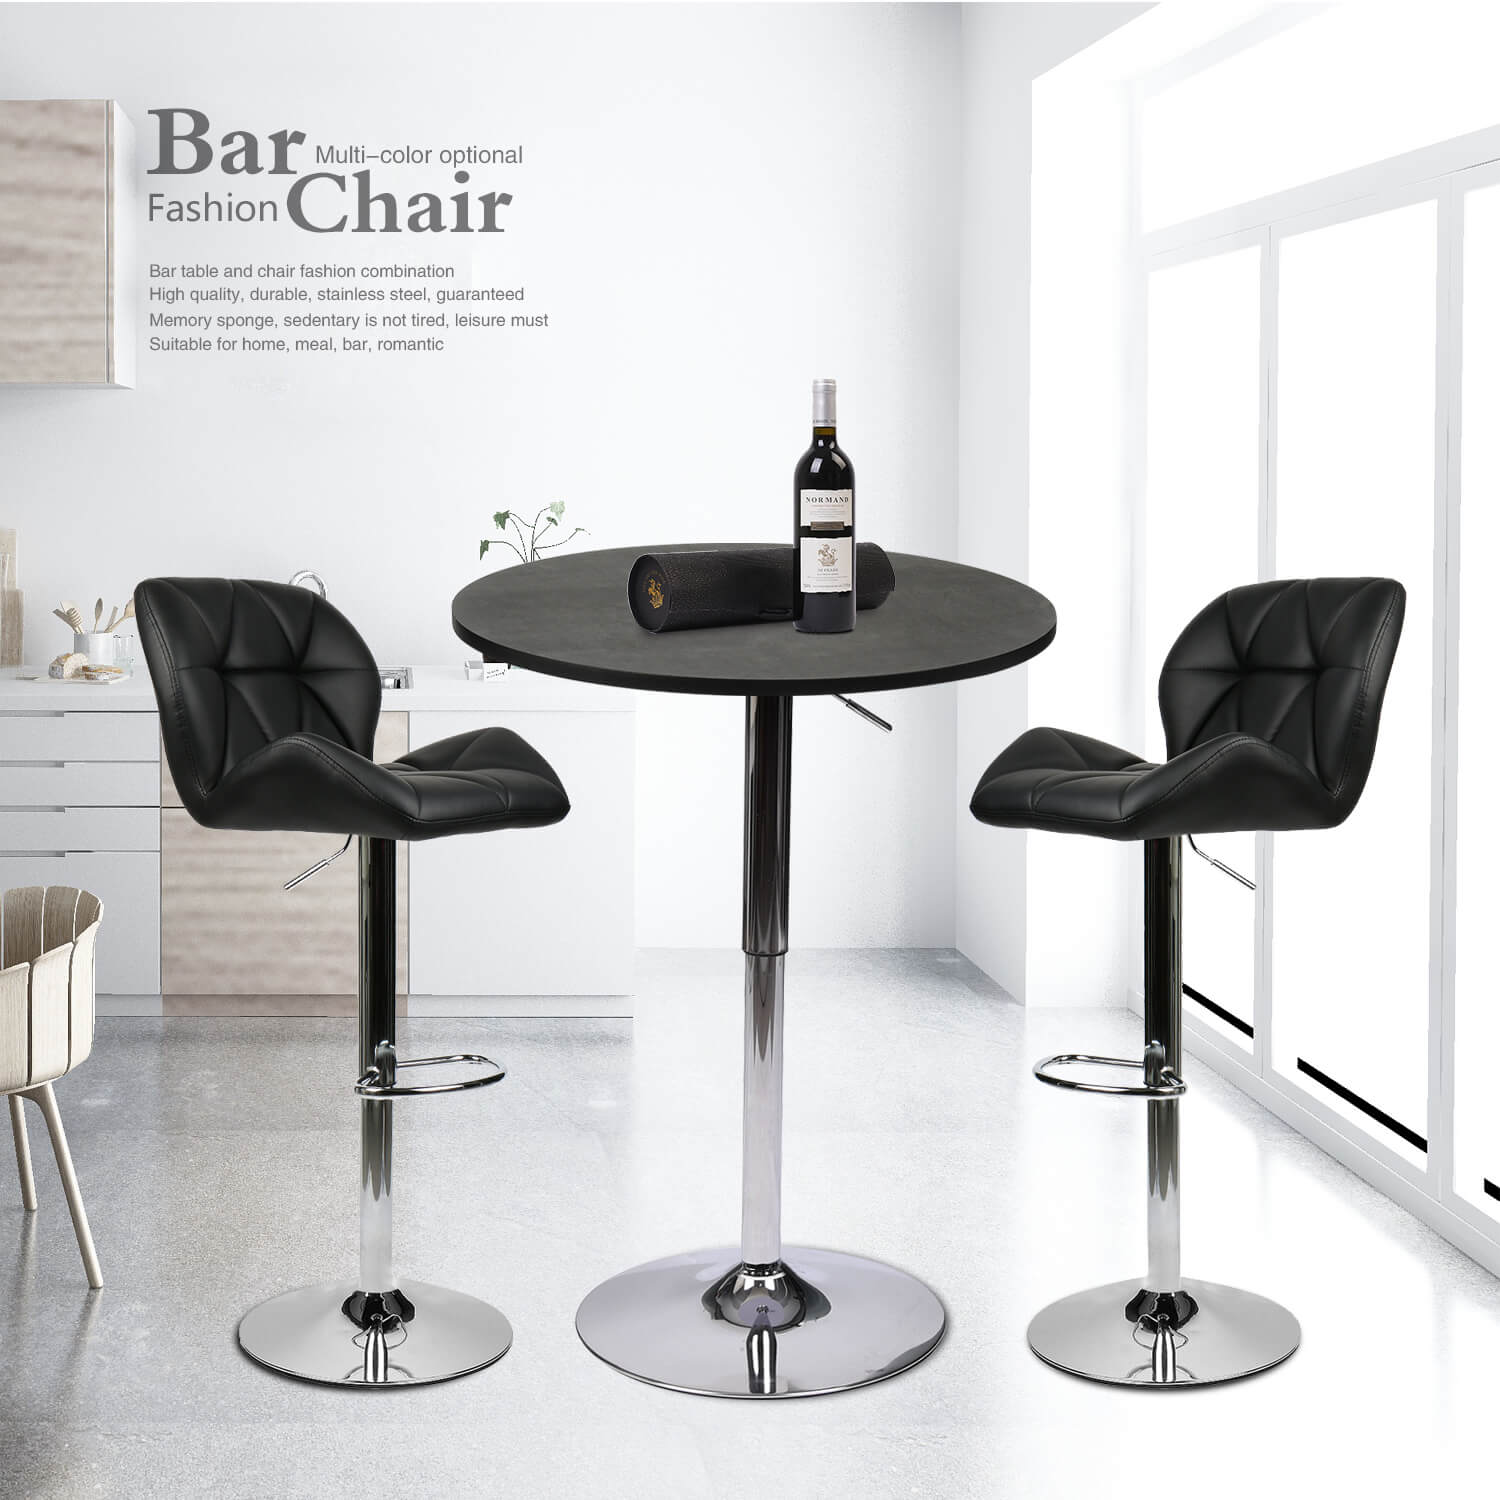 Elecwish Bar Table Set 3-Piece OW0301 black bar table with black bar stools display scene